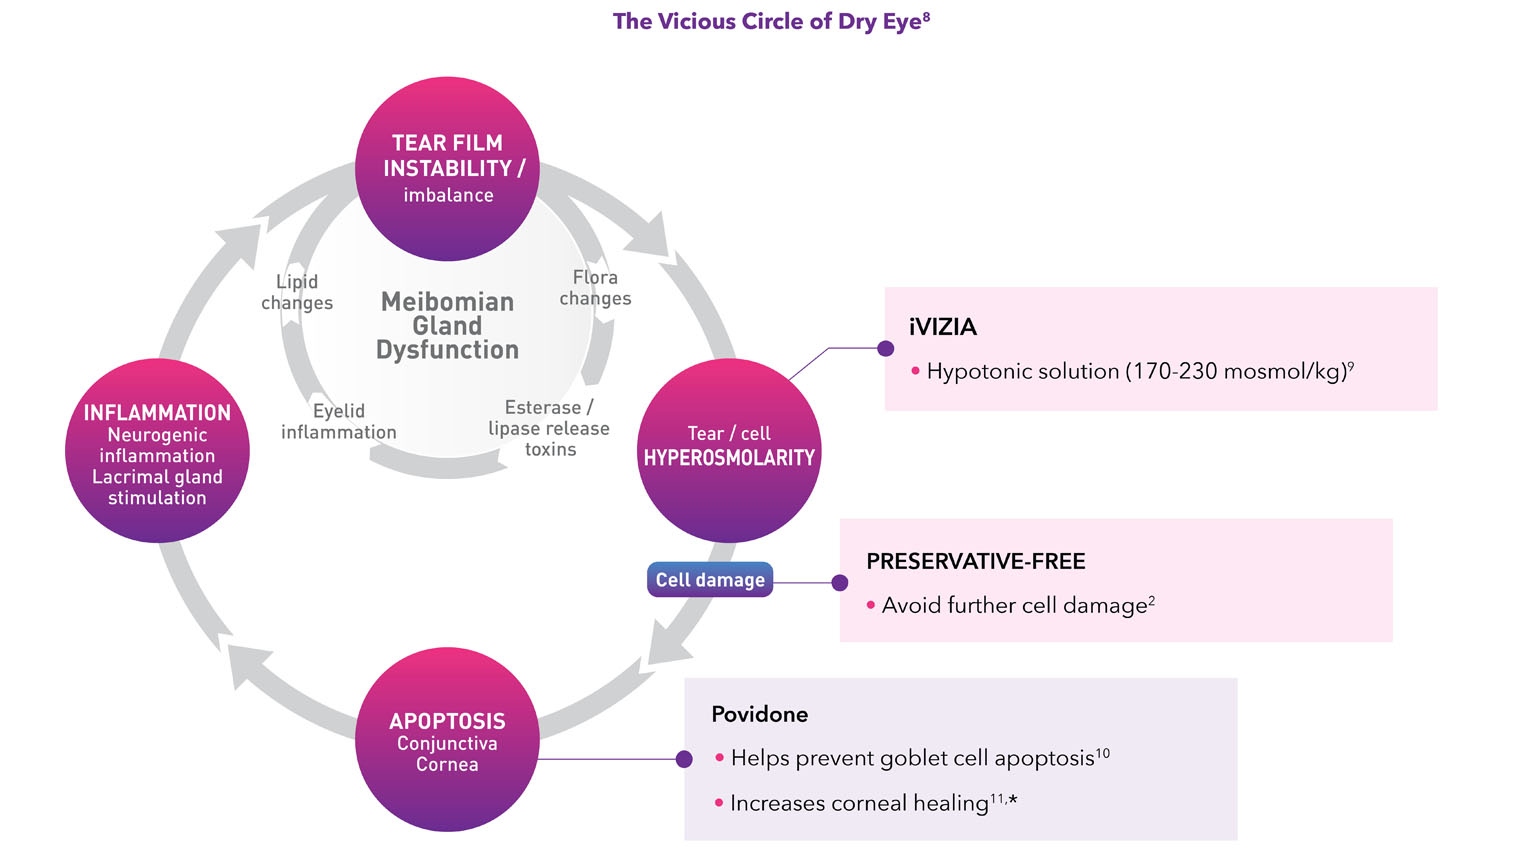 The Vicious Circle of Dry Eye